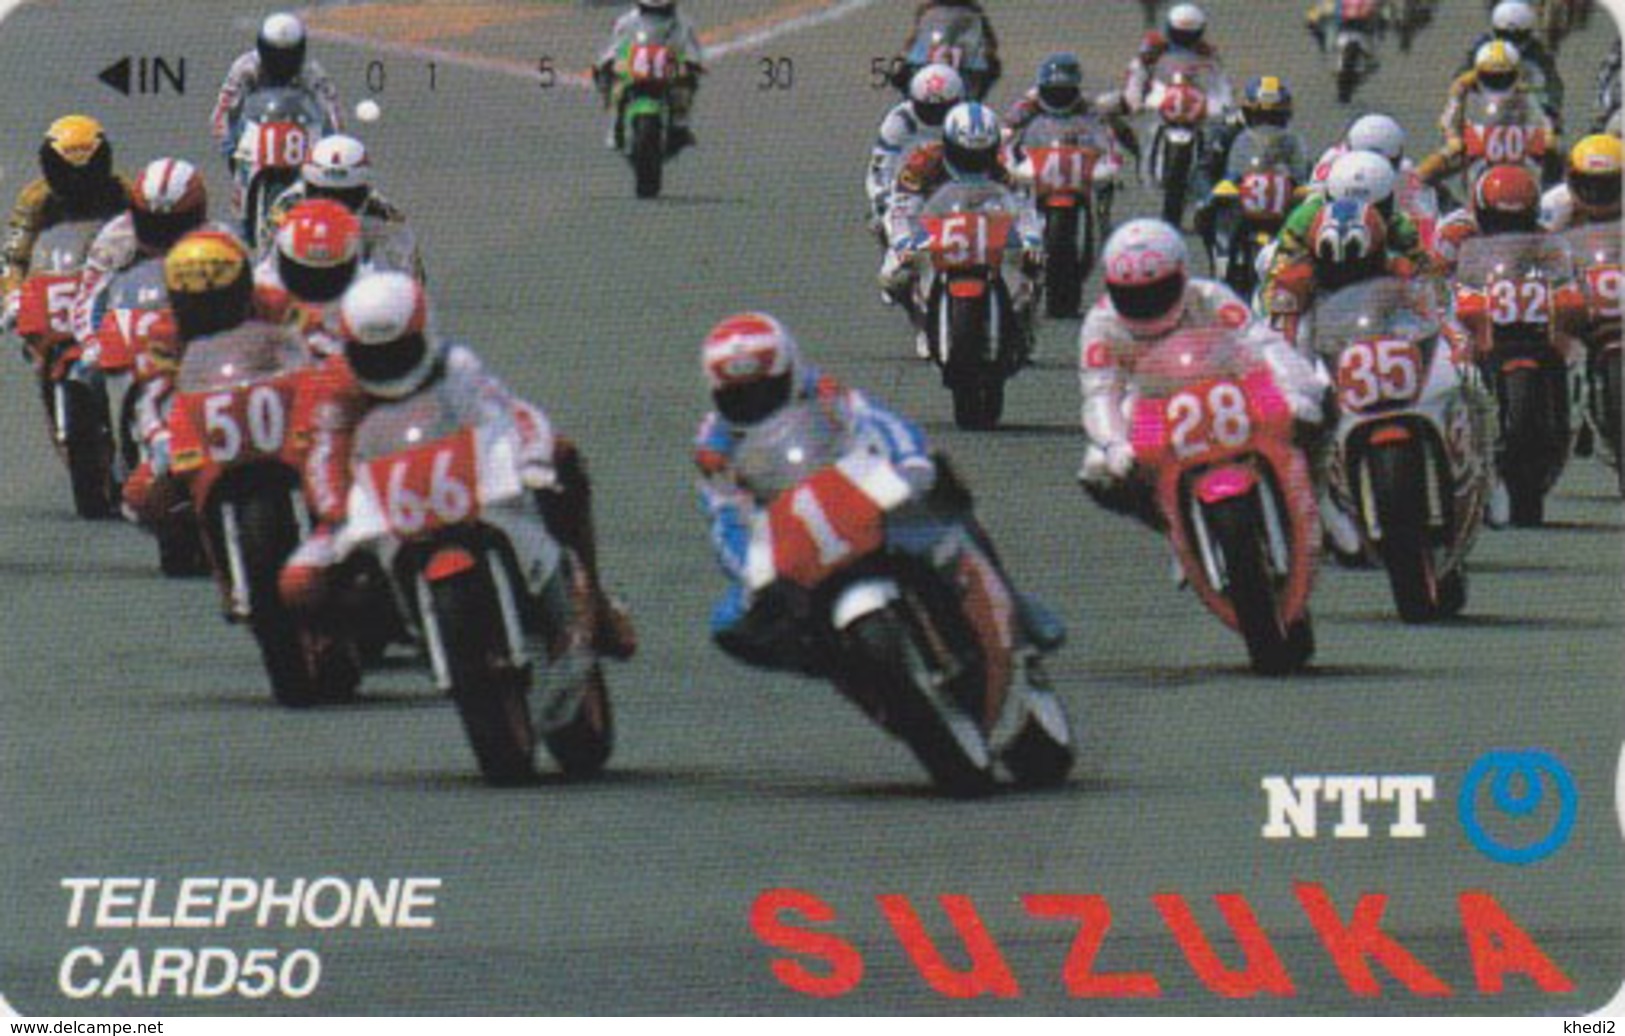 Télécarte Japon / NTT 290-038 ** ONE PUNCH ** - MOTO / SUZUKA - MOTOR BIKE RACE Japan Phonecard - Moto